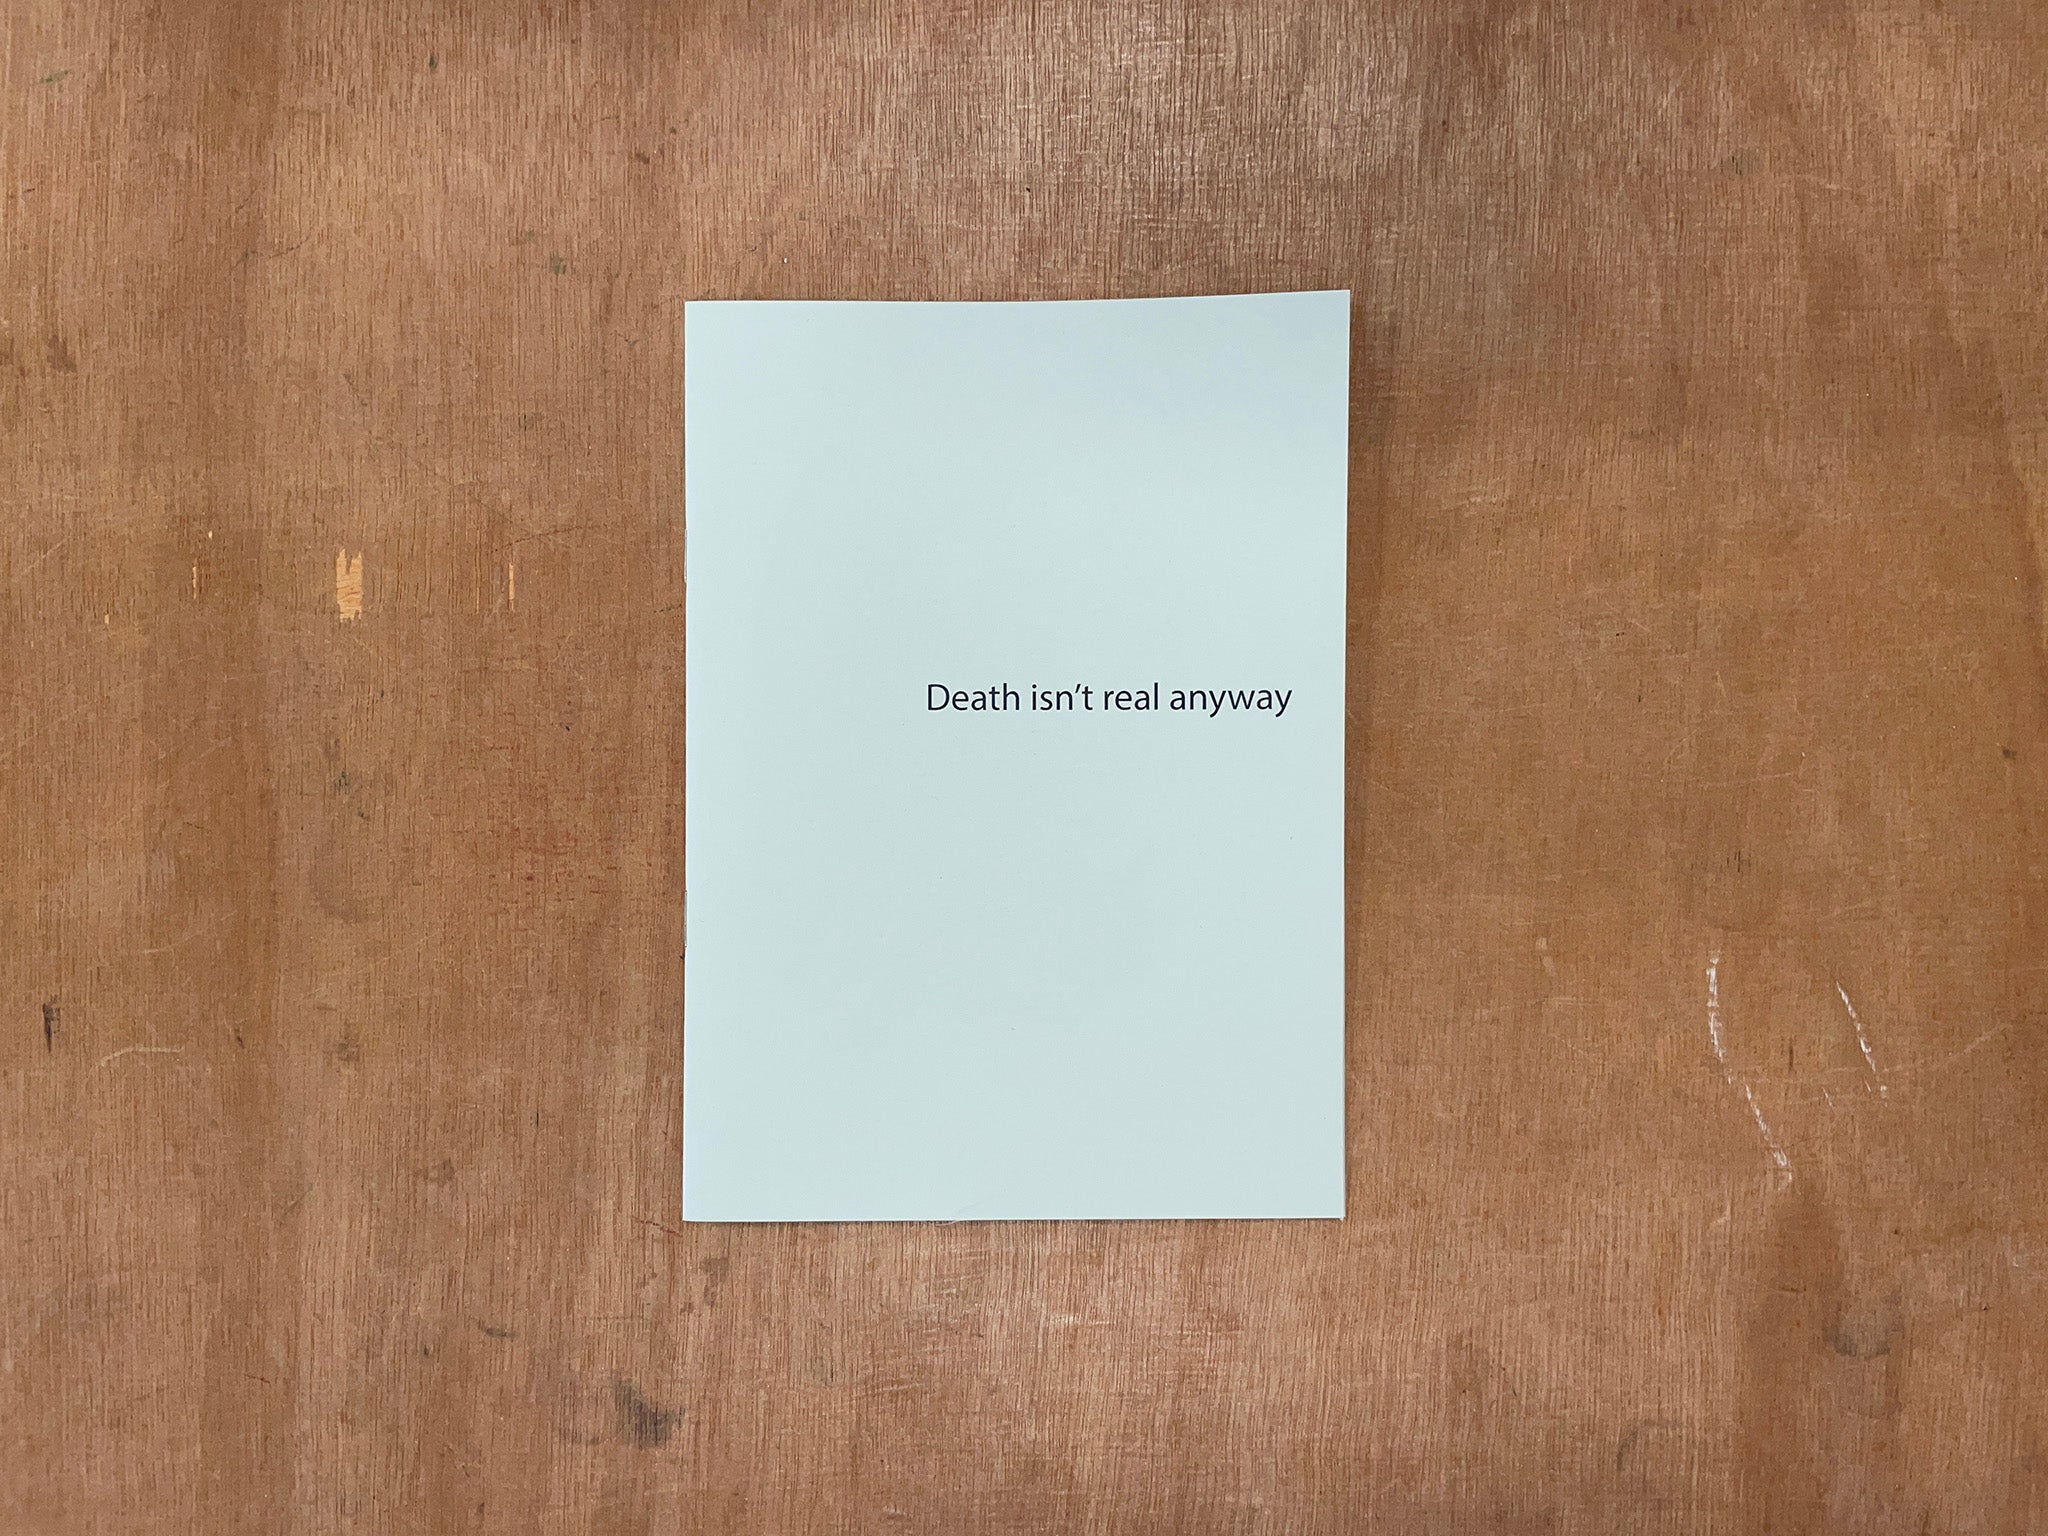 DEATH ISN'T REAL ANYWAY by Lorraine Hamilton